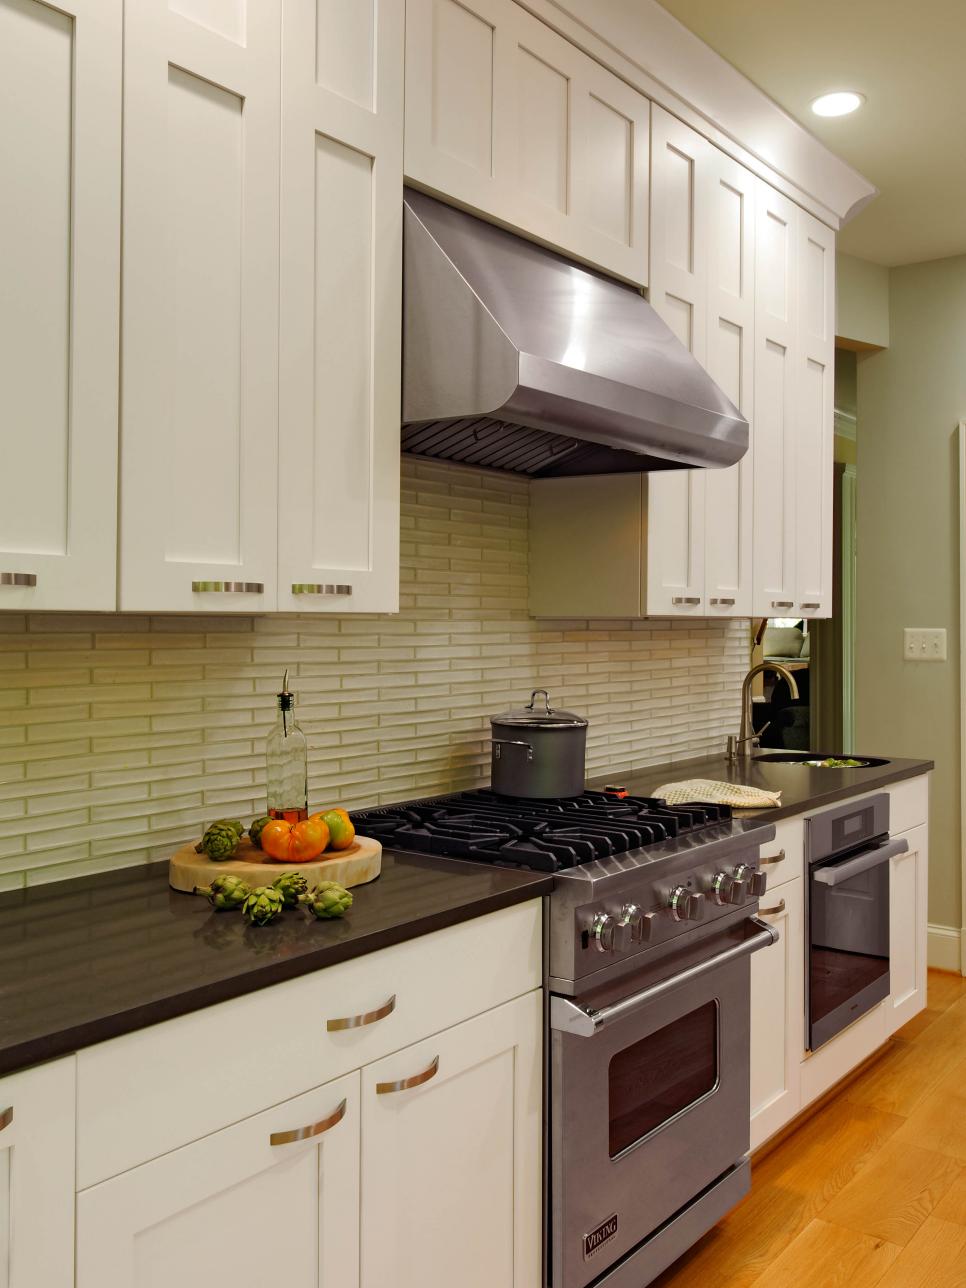 Kitchen With Limestone Backsplash and Stainless Steel Range Hood